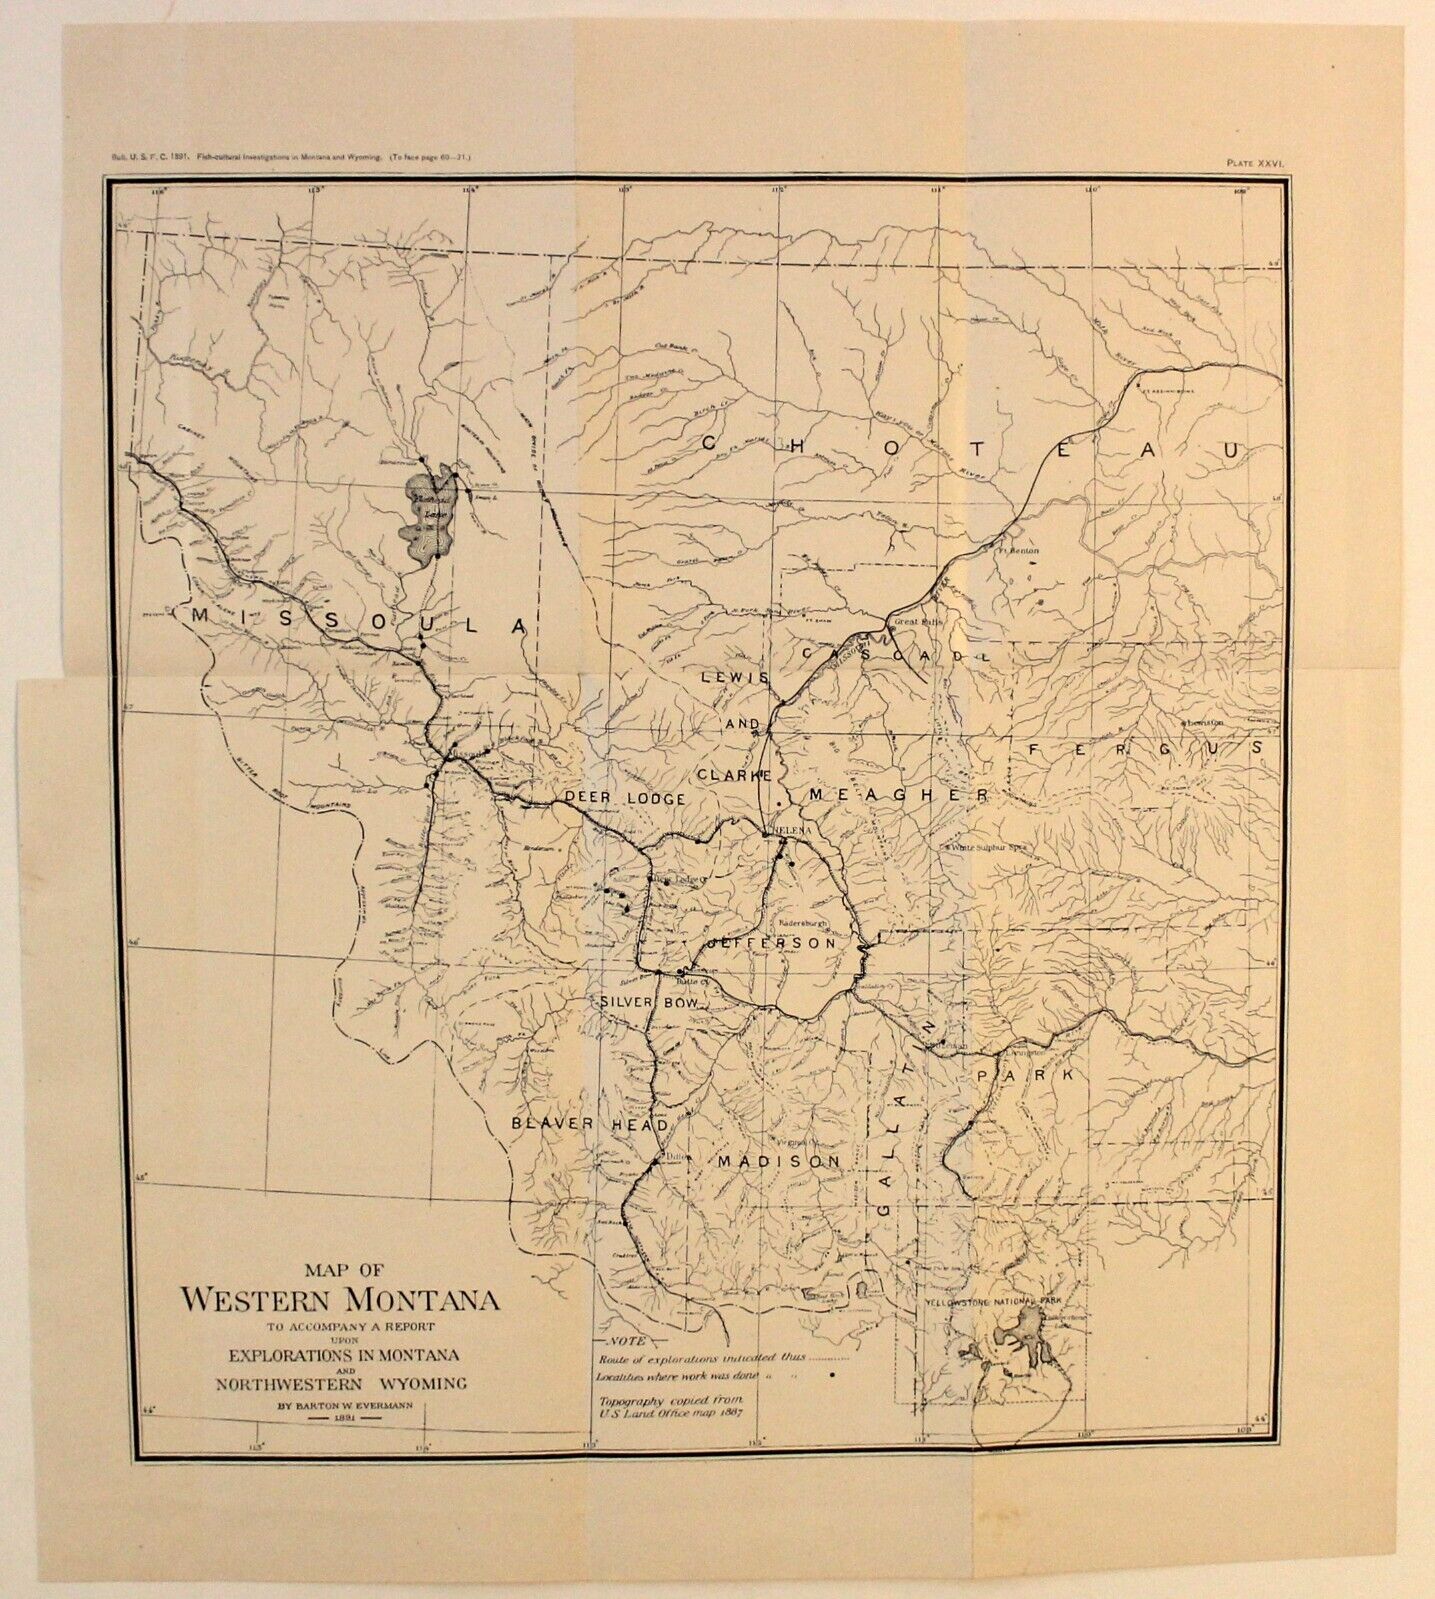 MISSOULA, DEER LODGE, WESTERN MONTANA Antique map 1891